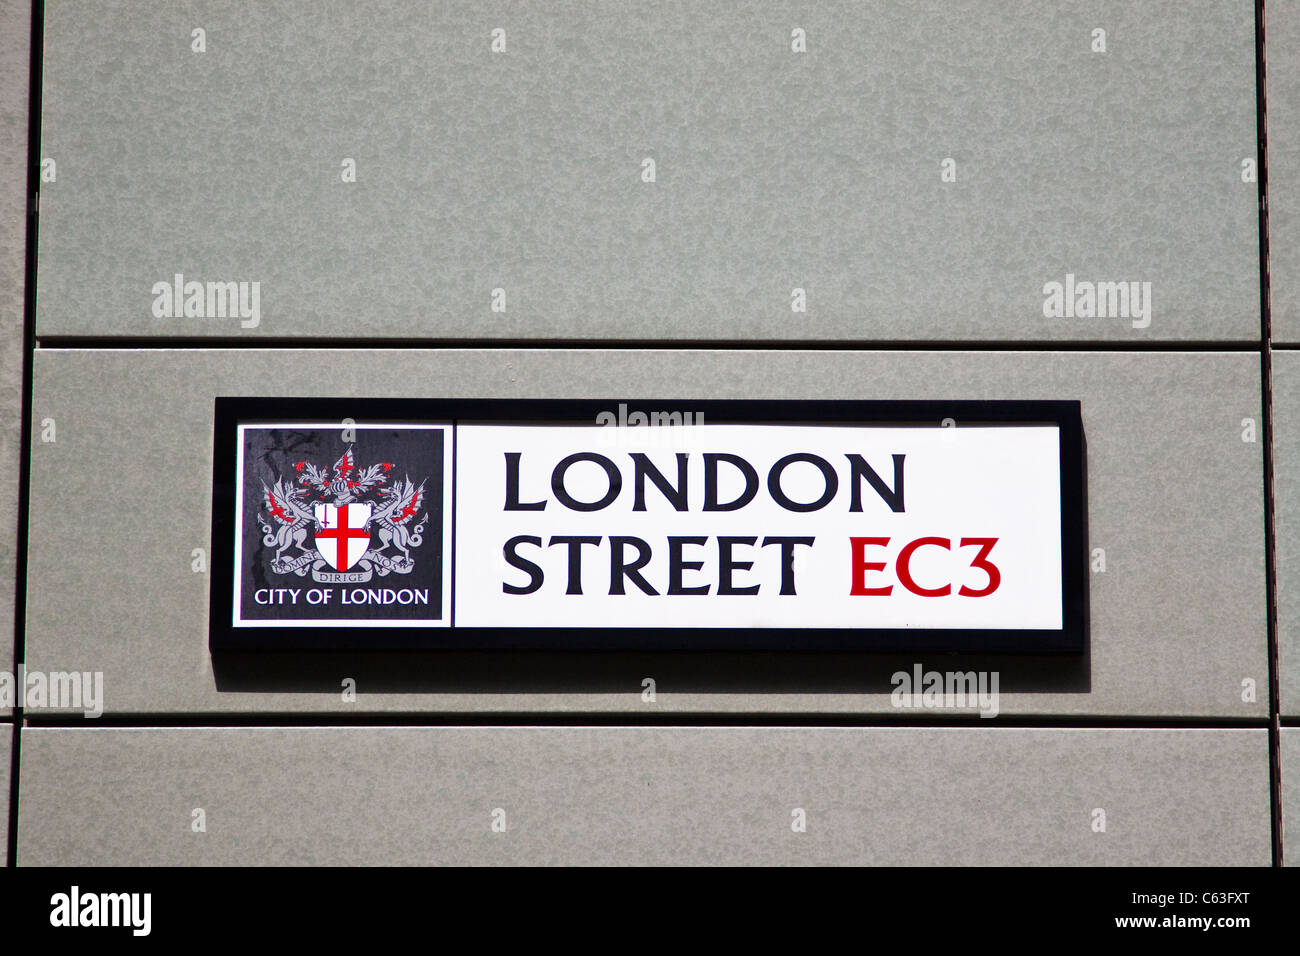 London street EC3 road sign Stock Photo